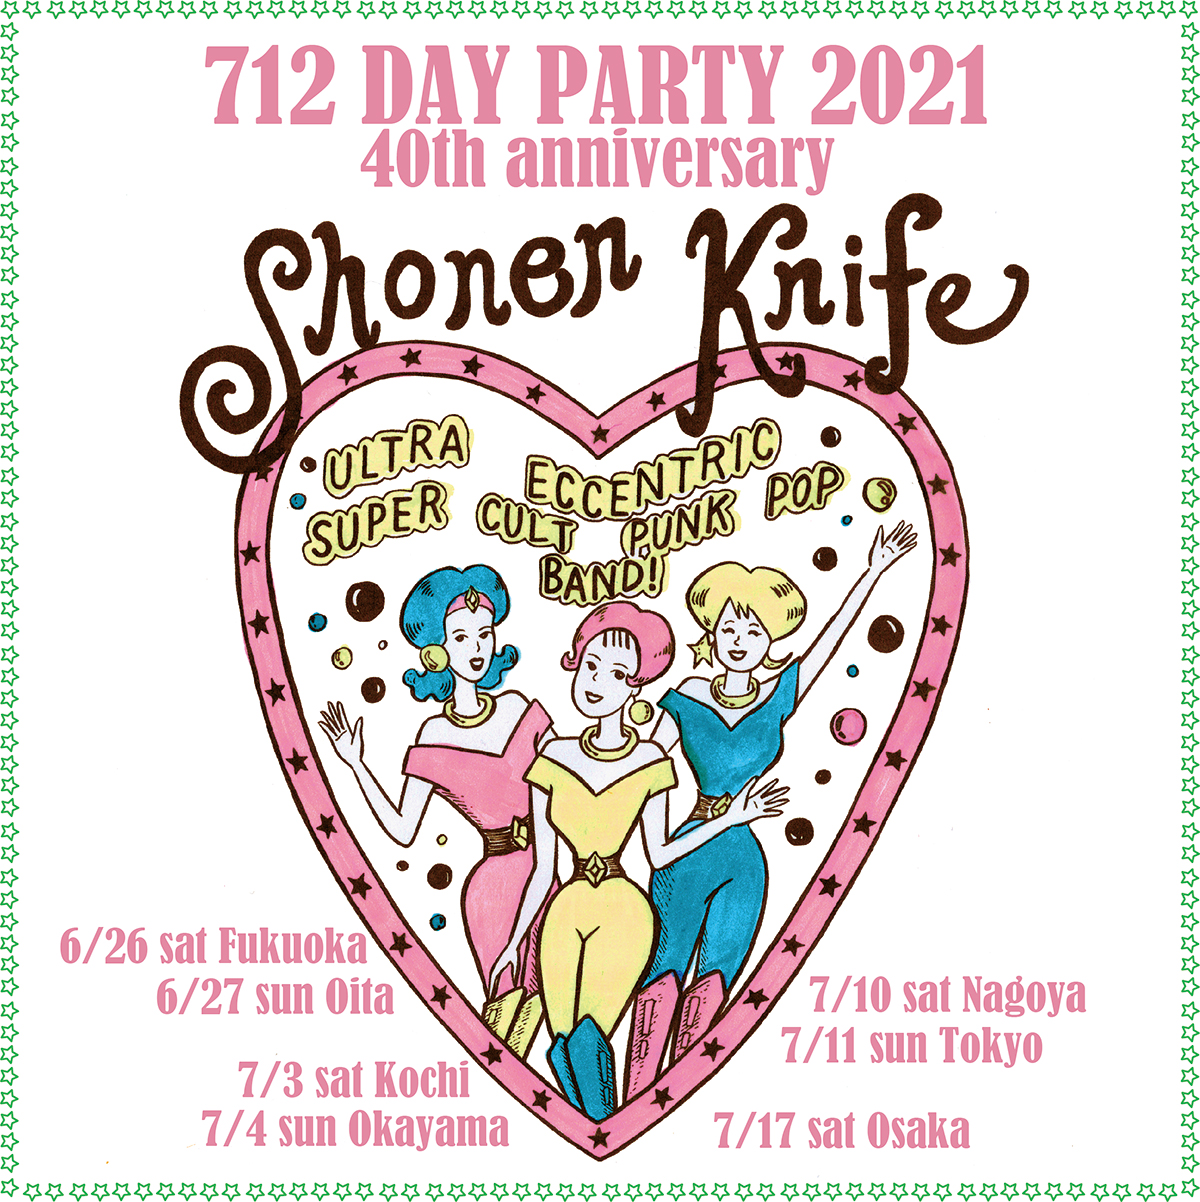 Shonen Knife 712 Day Party 2021